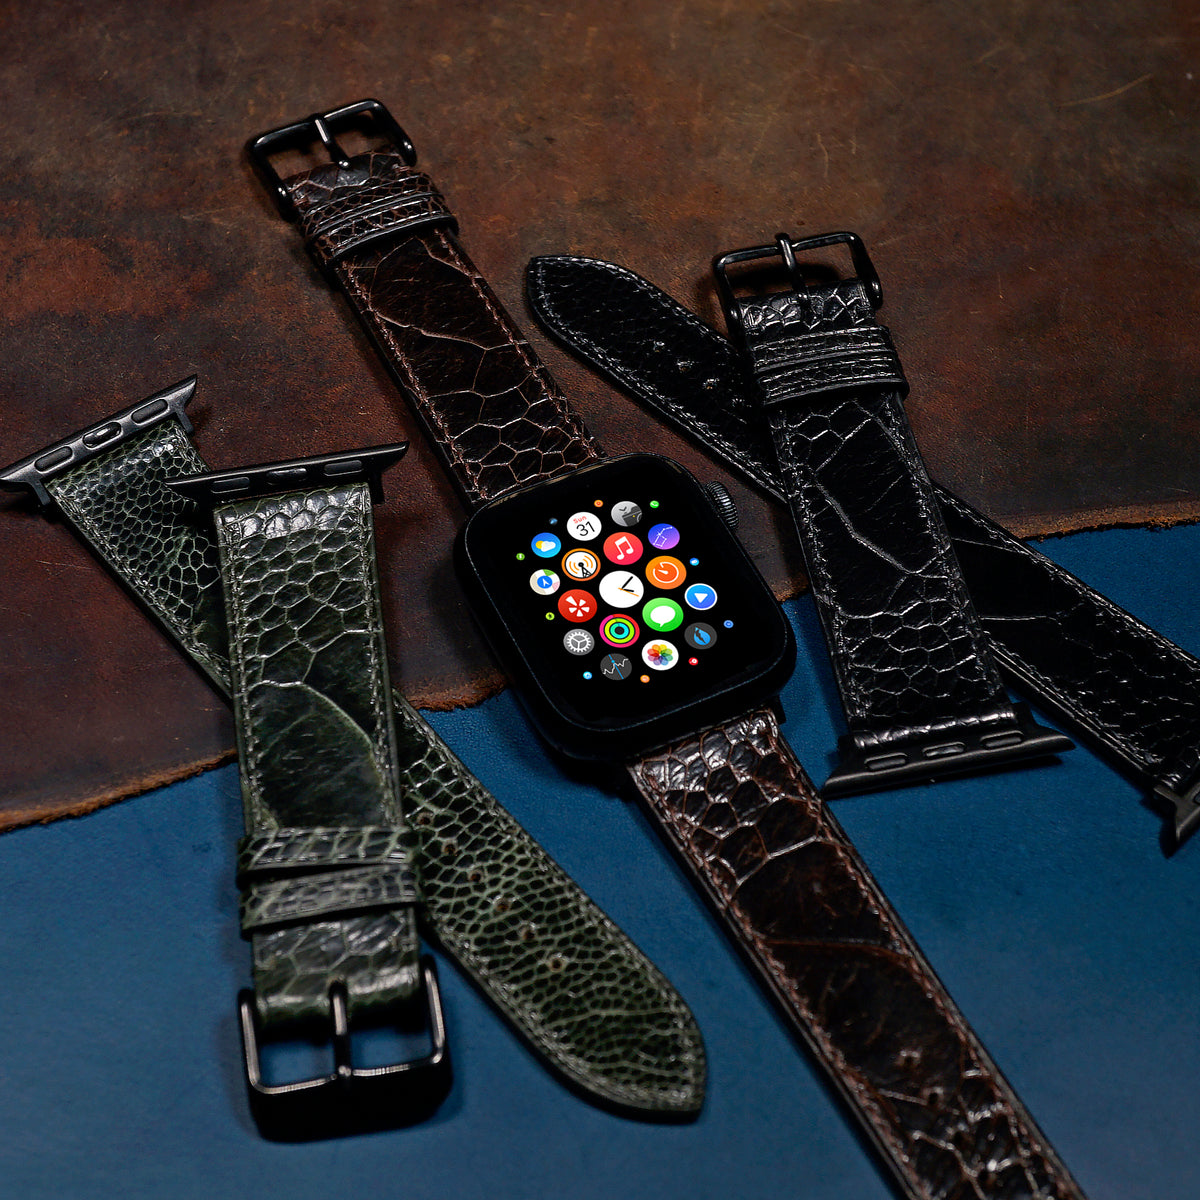 Ostrich Leather Watch Strap in Brown (Apple Watch) - Nomad Watch Works SG